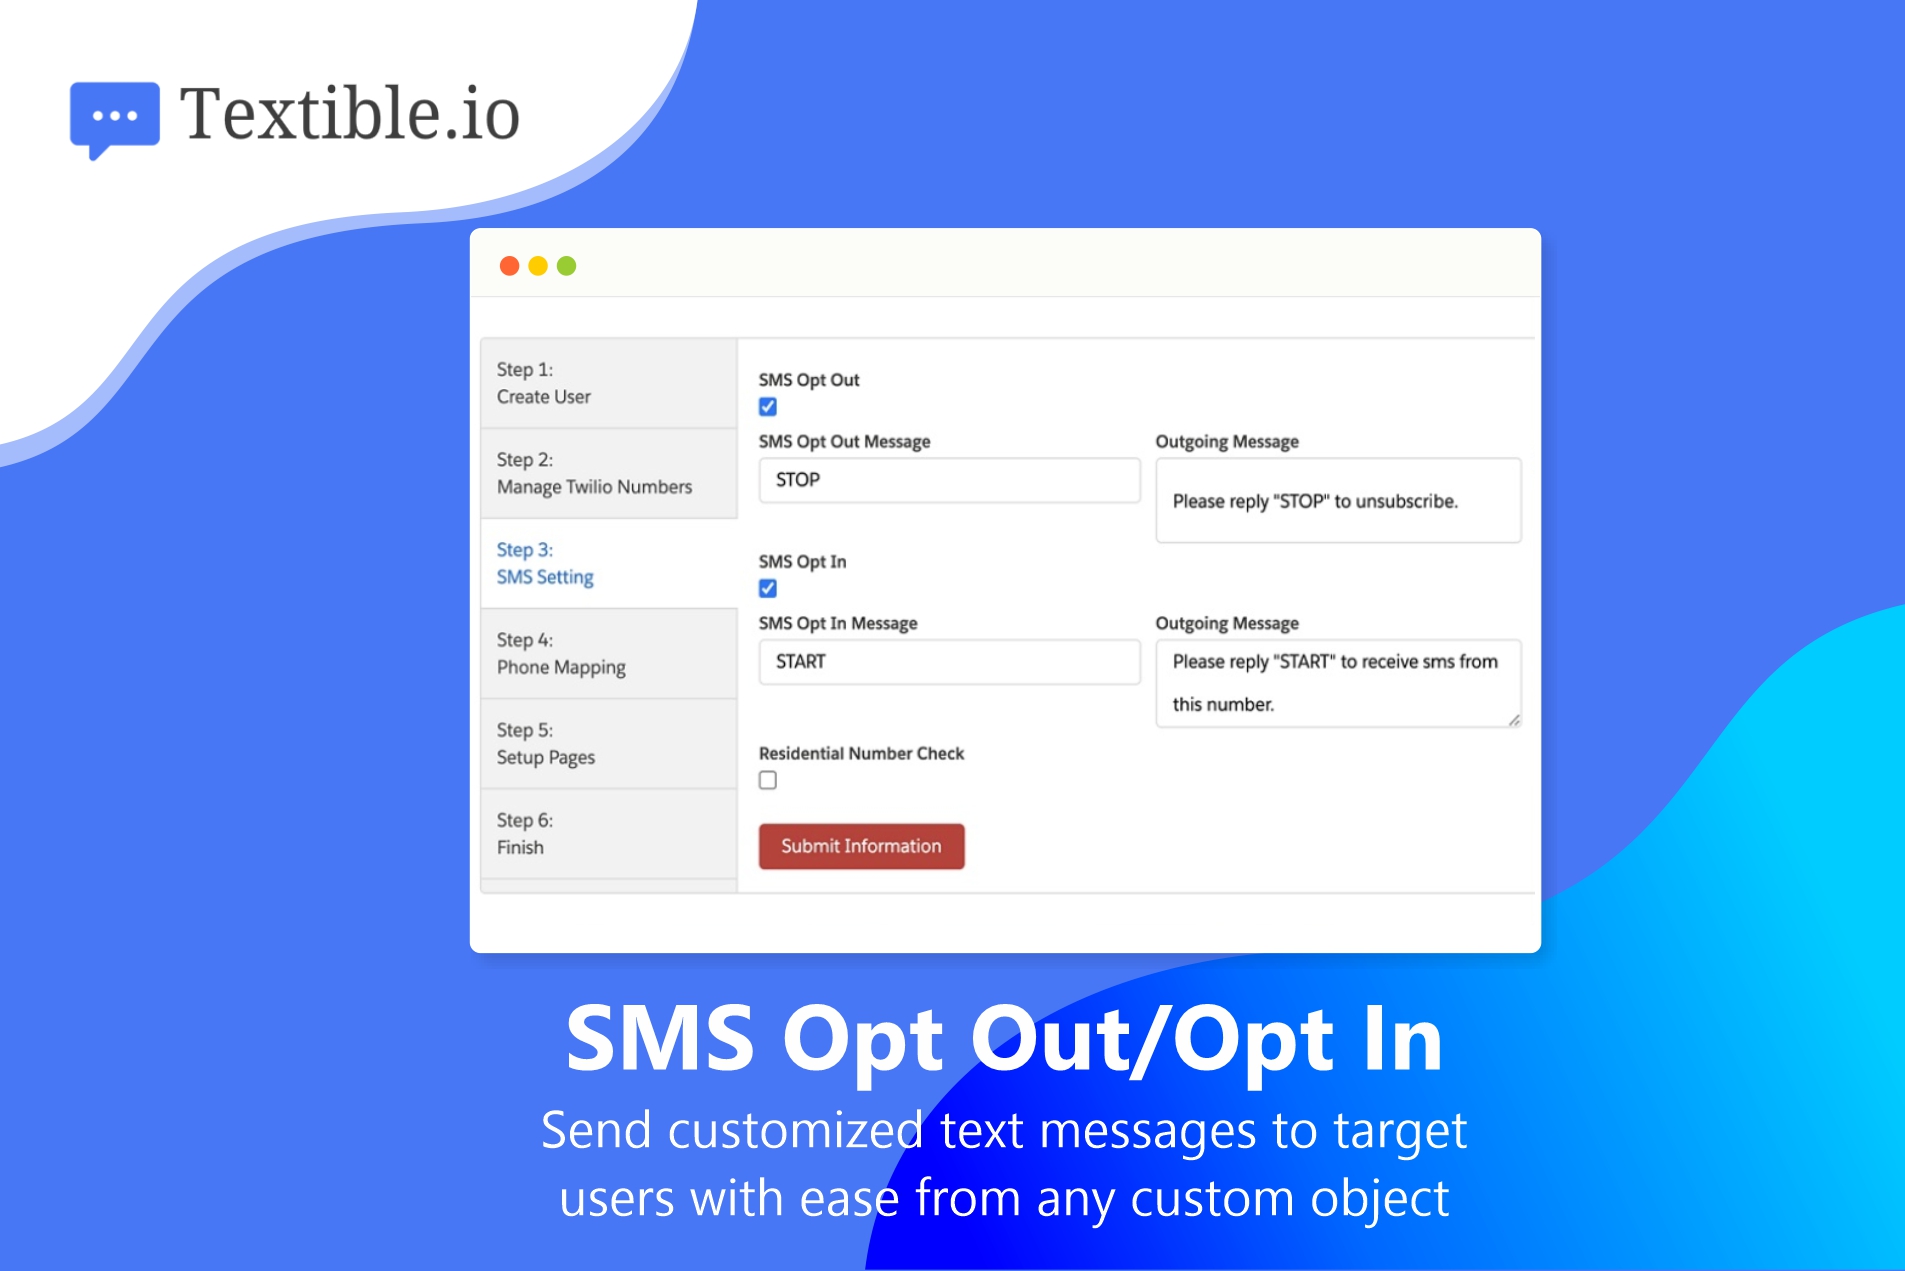 Salesforce Texting App